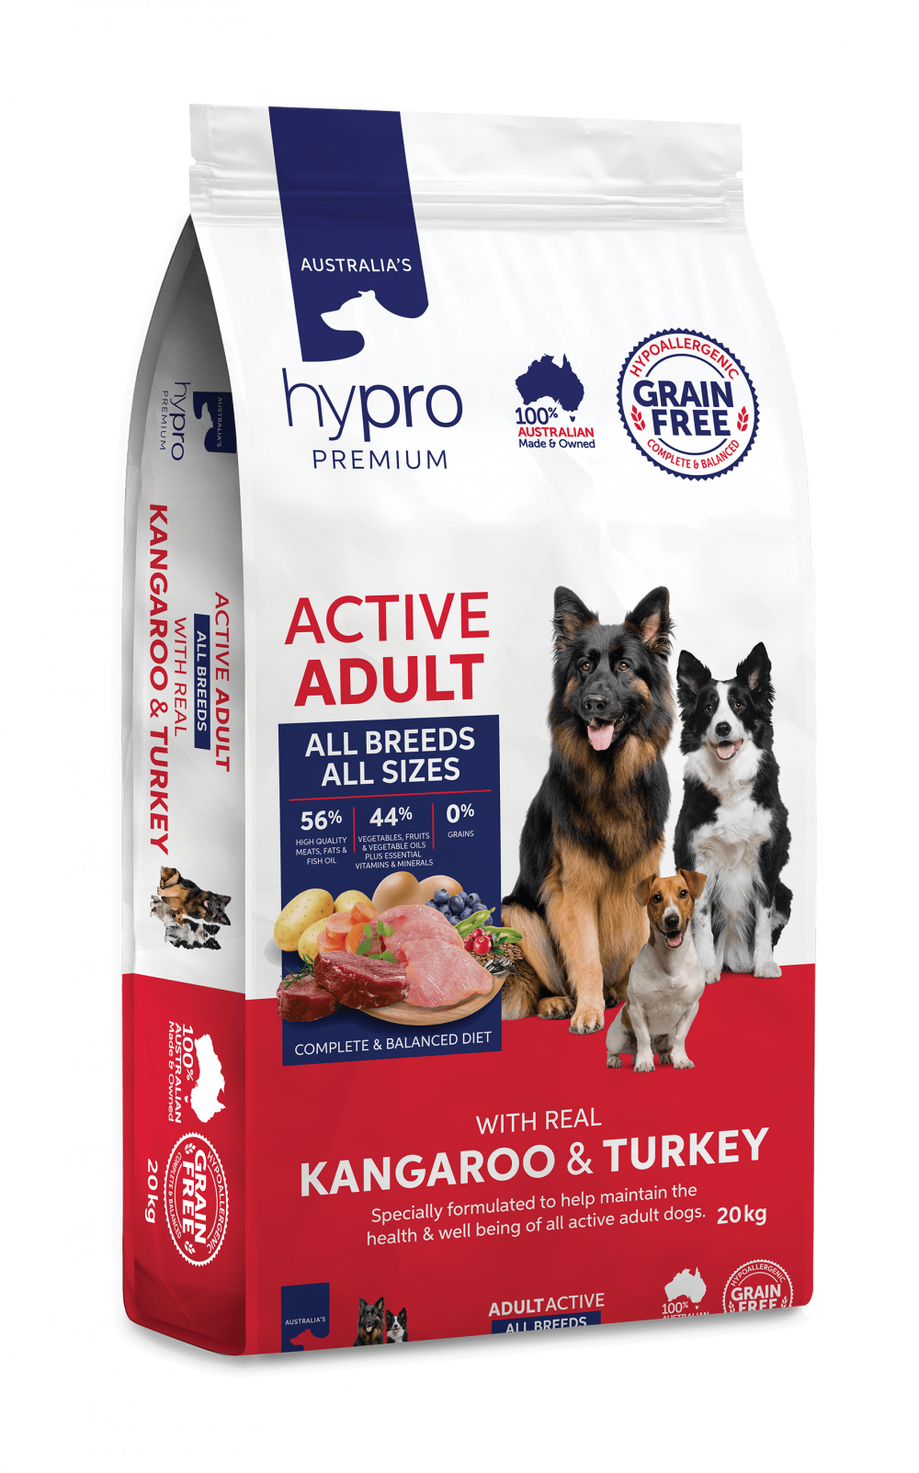 hypro PREMIUM ACTIVE ADULT Grain Free Kangaroo & Turkey 20kg